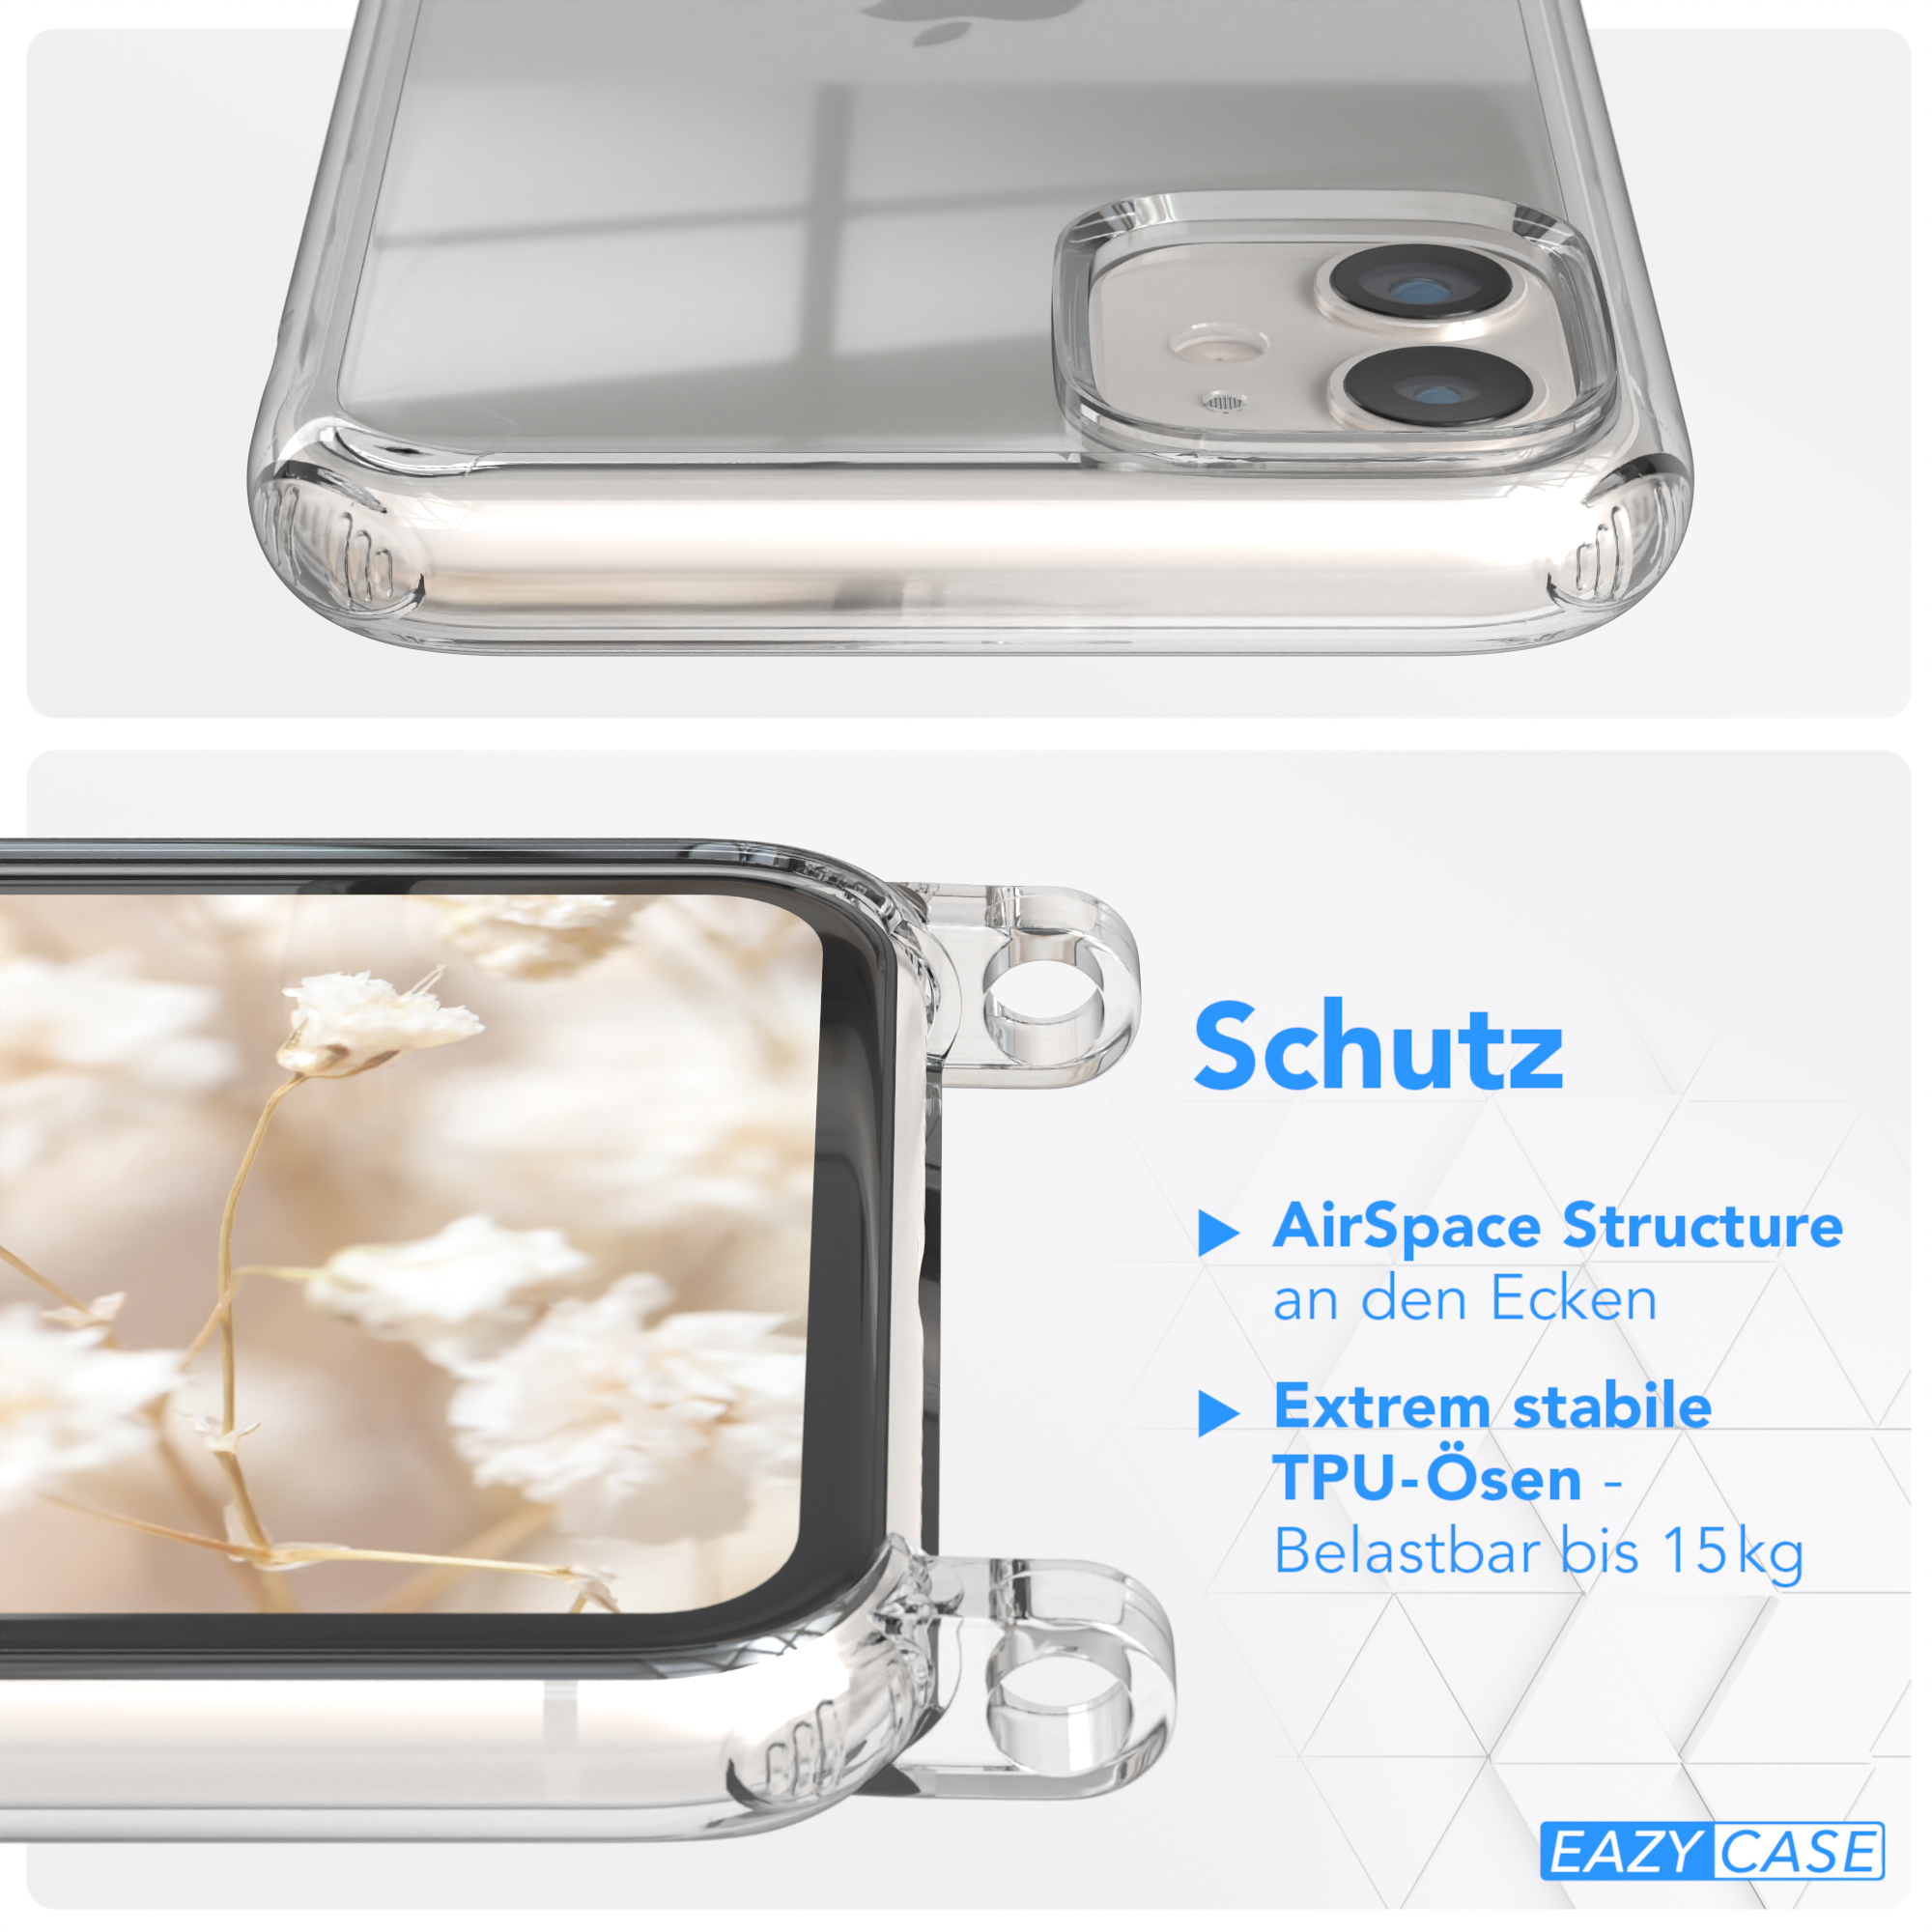 mit Boho EAZY Orange Style, CASE Kordel Transparente Handyhülle Apple, iPhone 11, / Grün Umhängetasche,